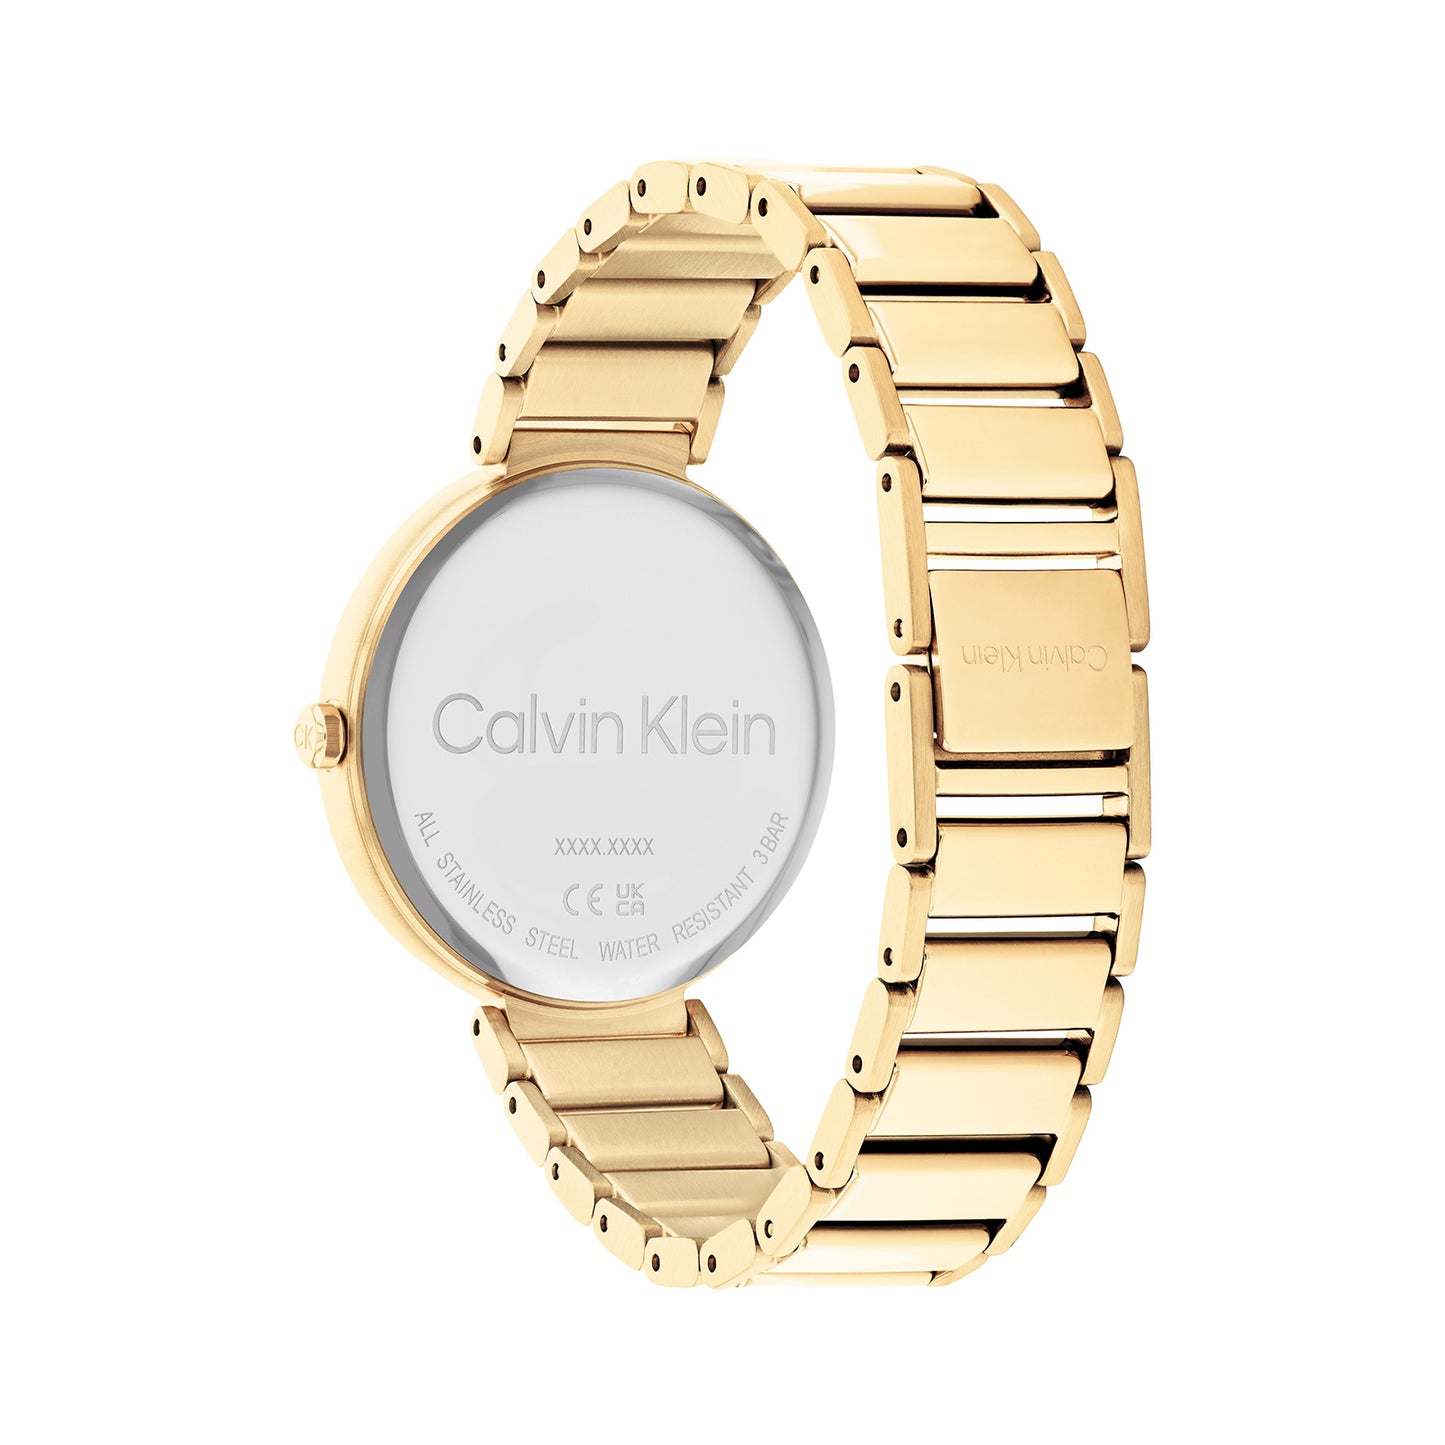 Calvin Klein 25200136 Women's Steel Watch